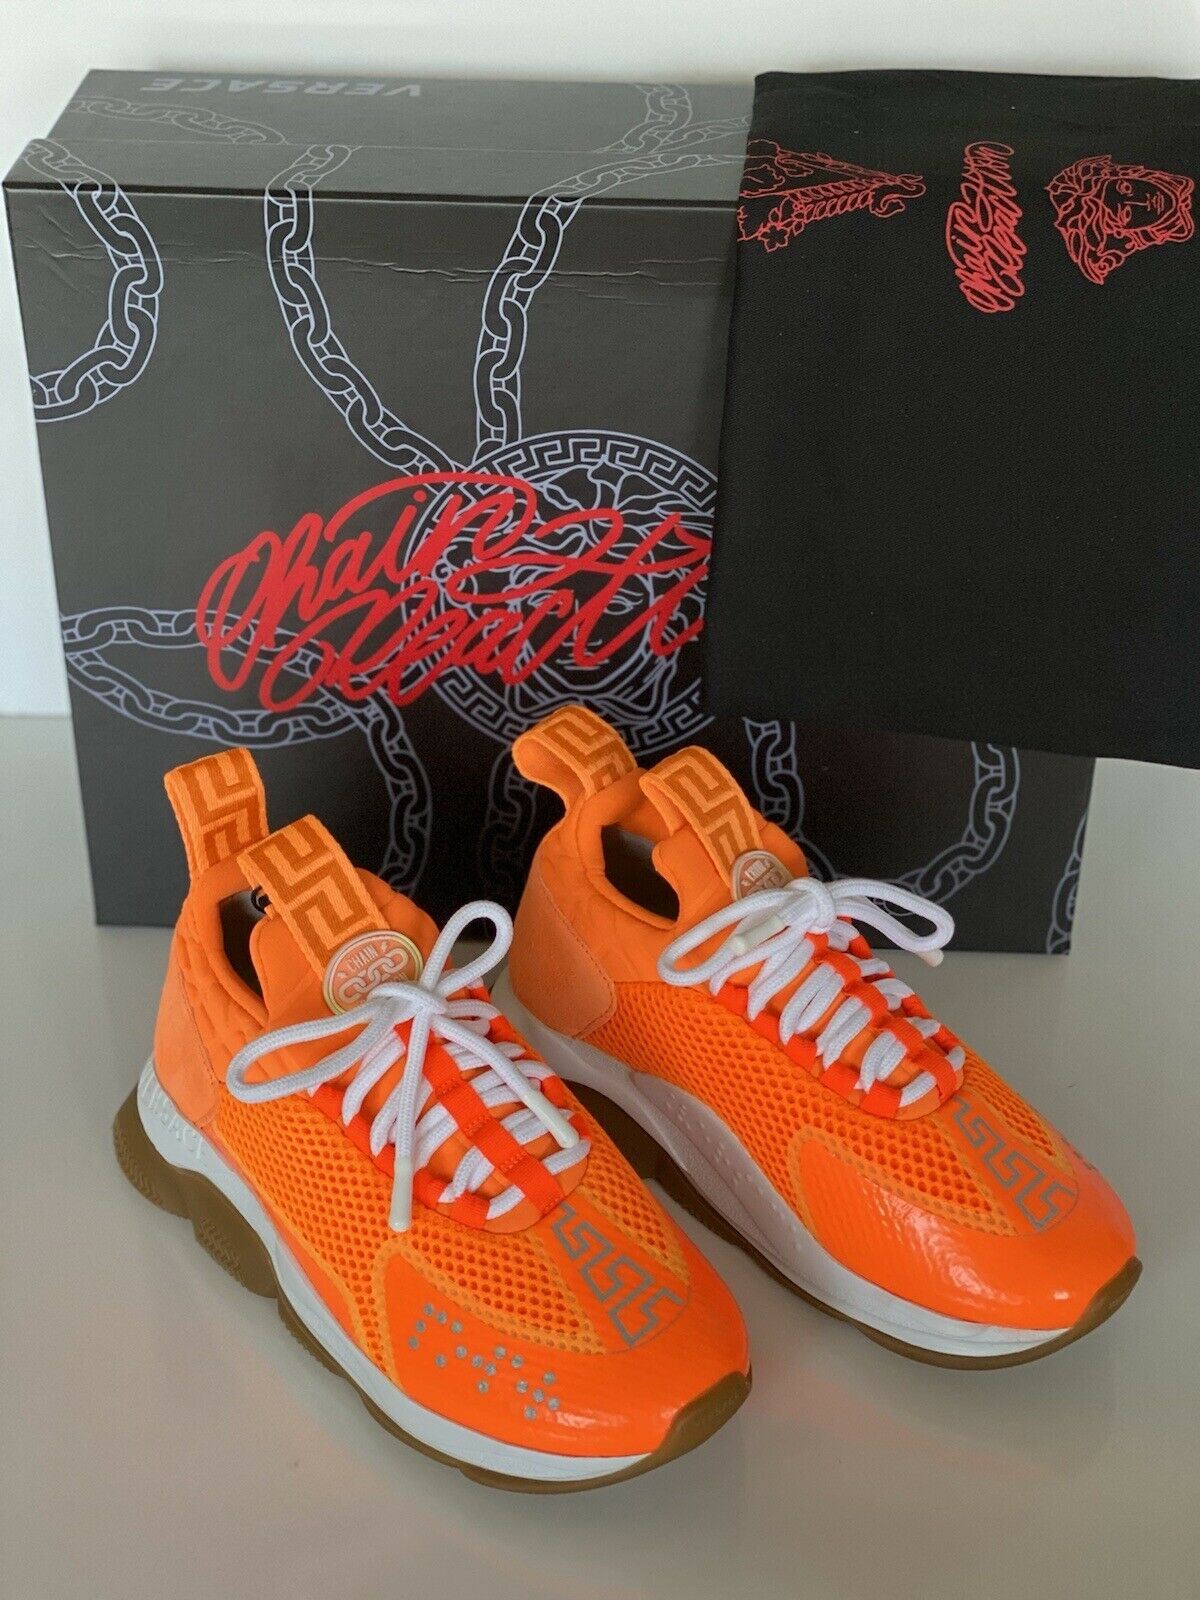 NIB Versace Orange Sparkle Chain Reaction Sneakers 6 US (36 EU) Hergestellt in Italien 